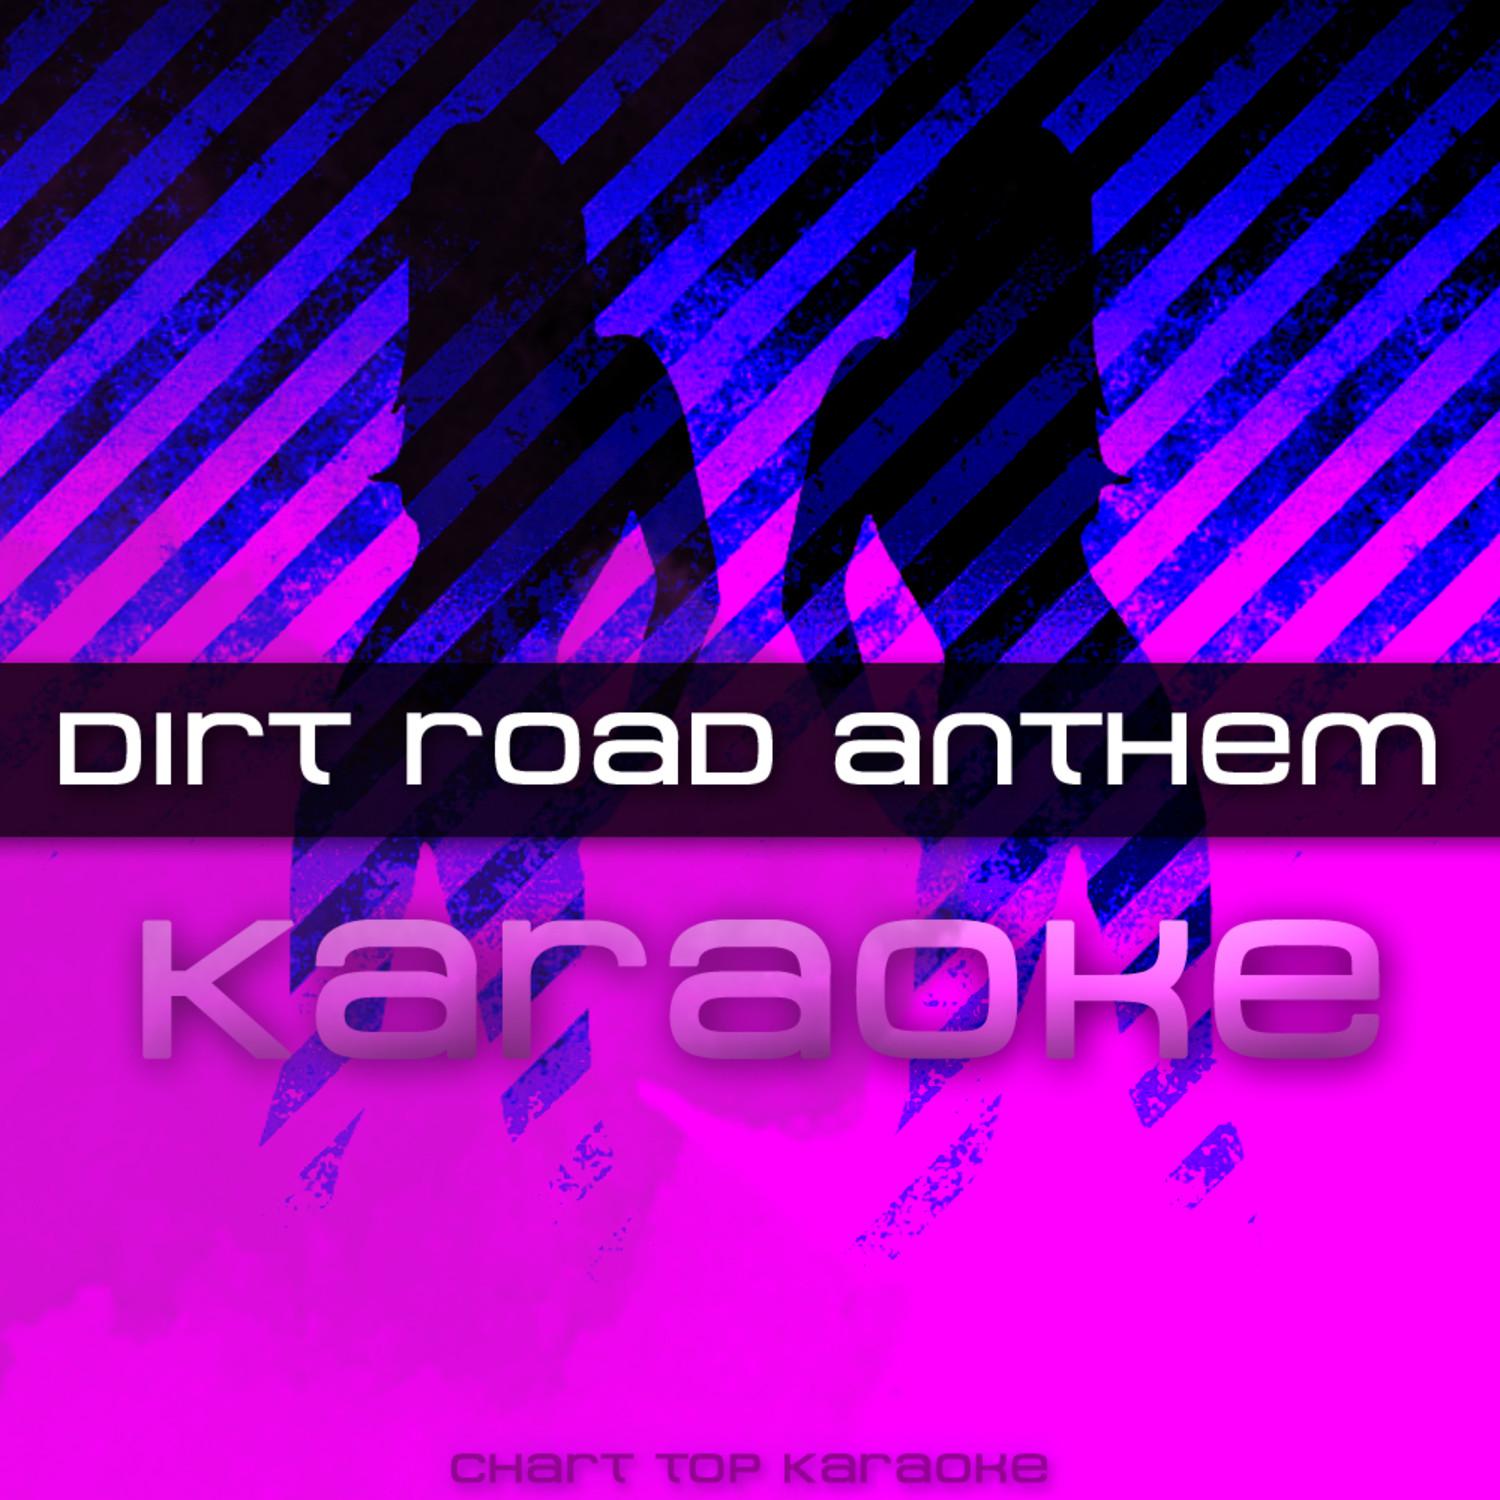 Dirt Road Anthem (Karaoke)